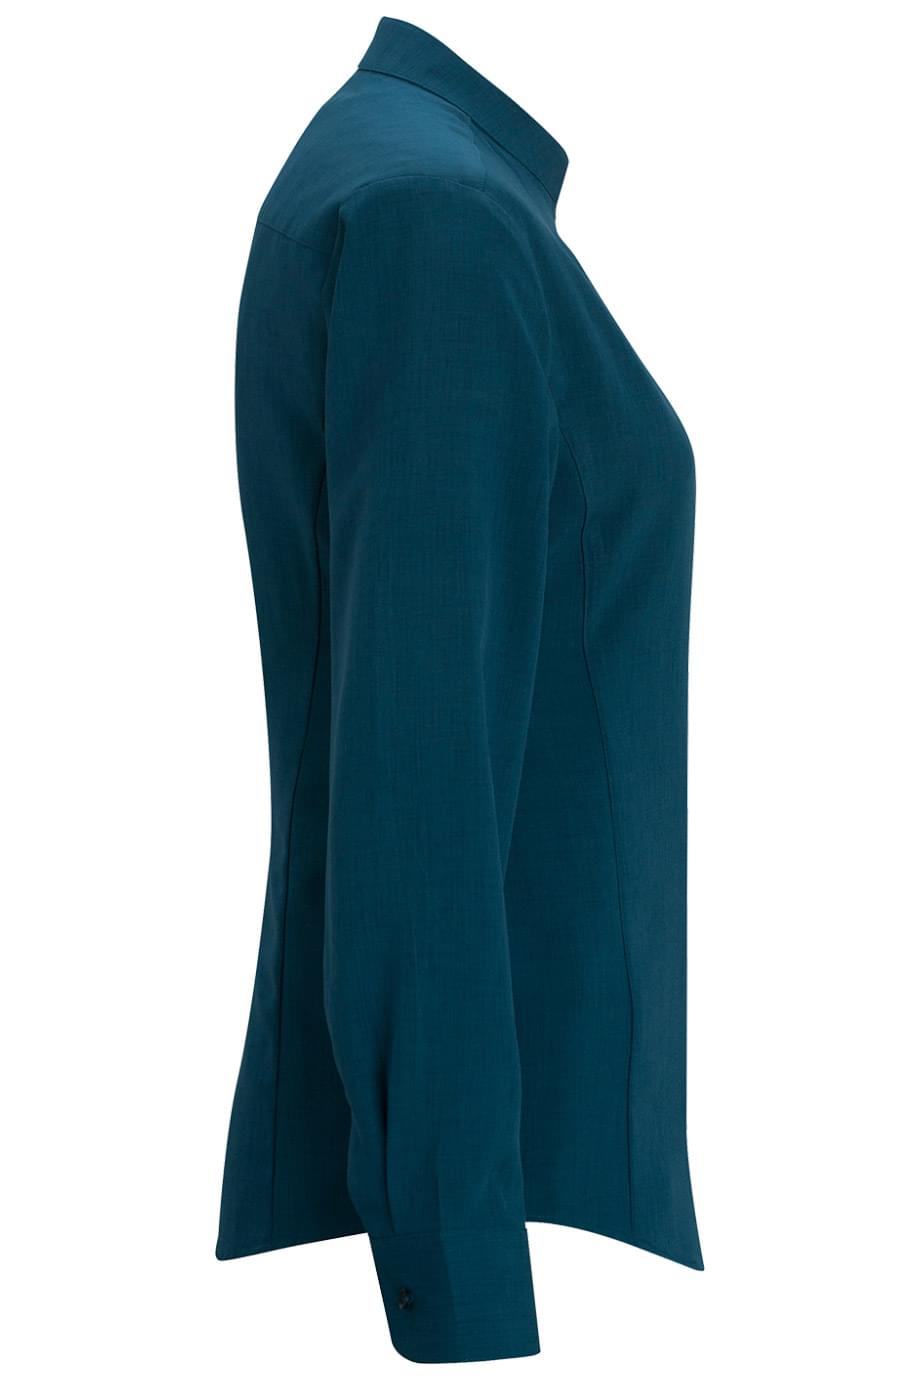 STAND-UP COLLAR BATISTE SHIRT | Edwards Garment